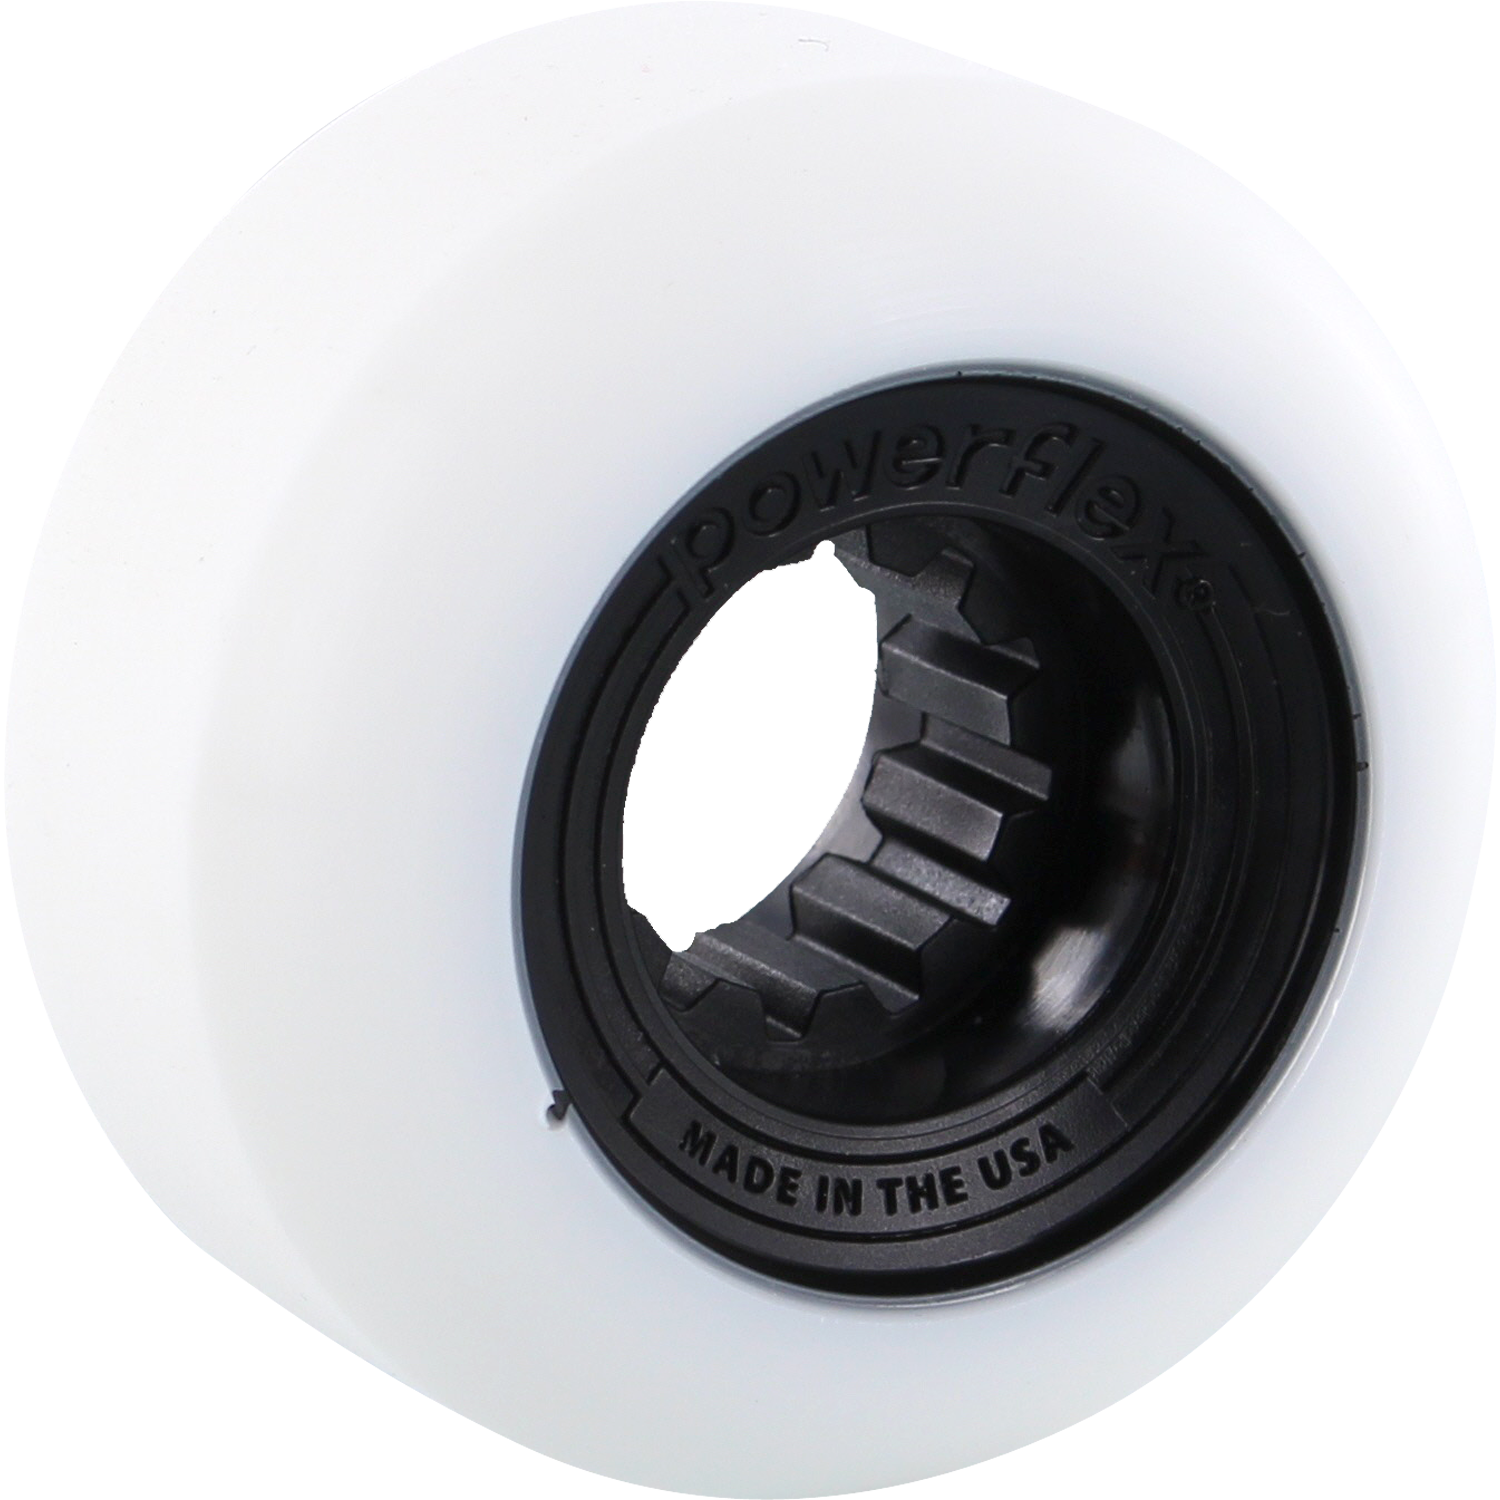 Powerflex Gumball 52mm 83b White/Black Skateboard Wheels (Set of 4)